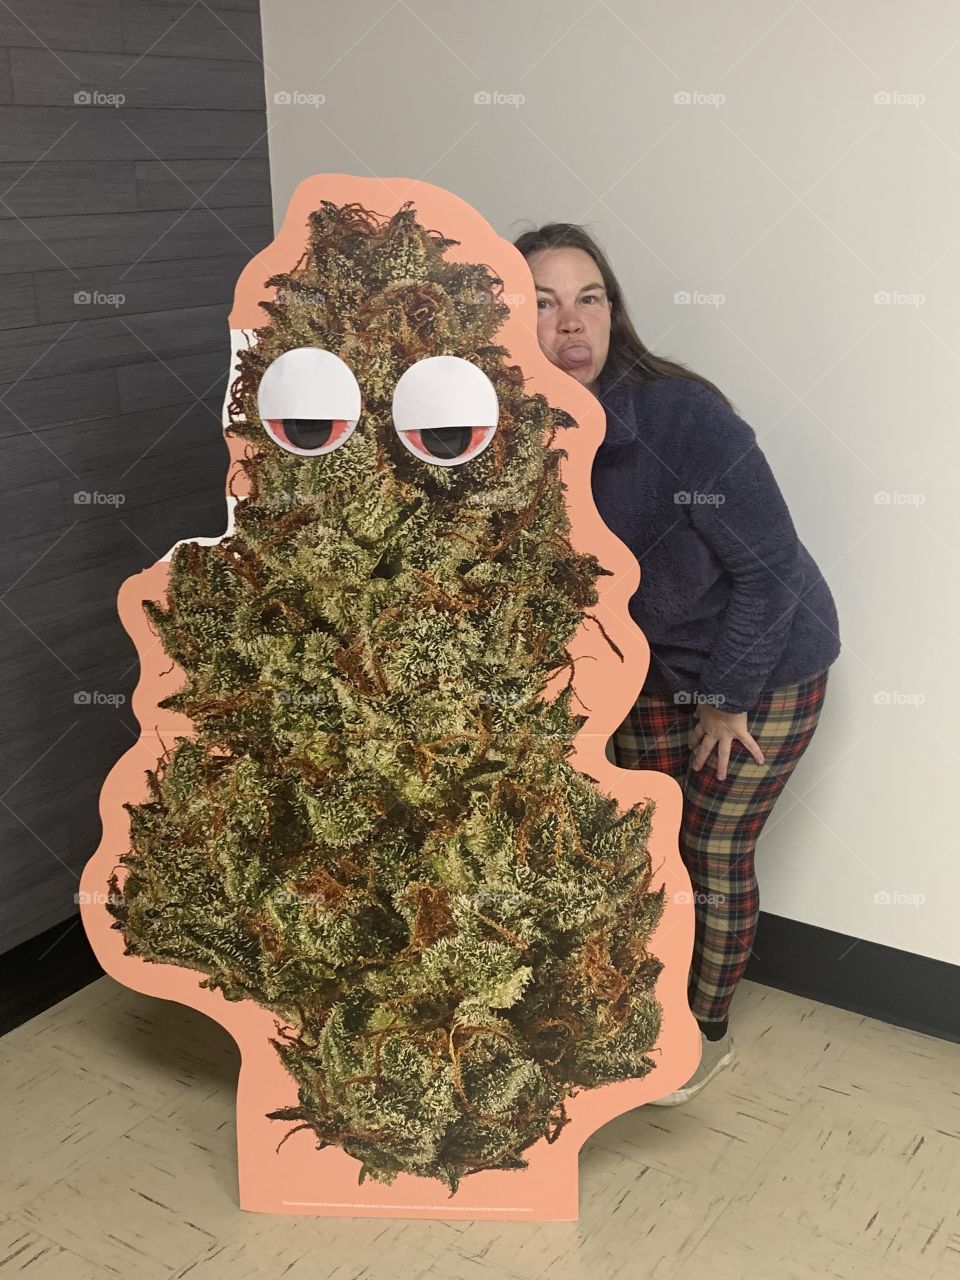 Me with a marijuana stand 